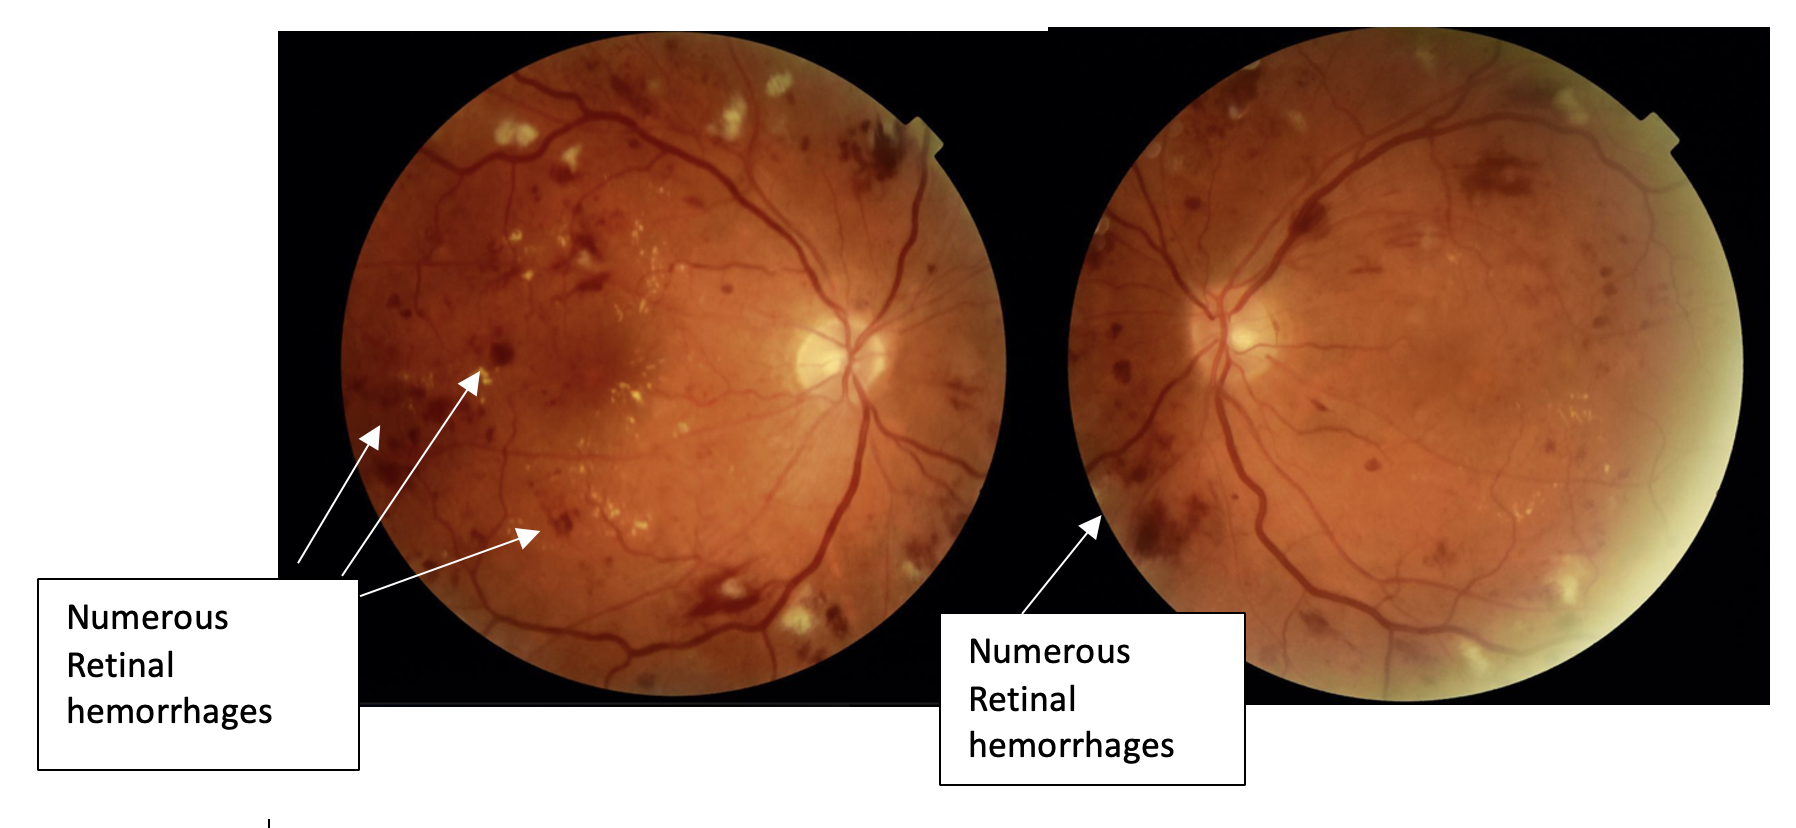 Before diabetic retinopathy